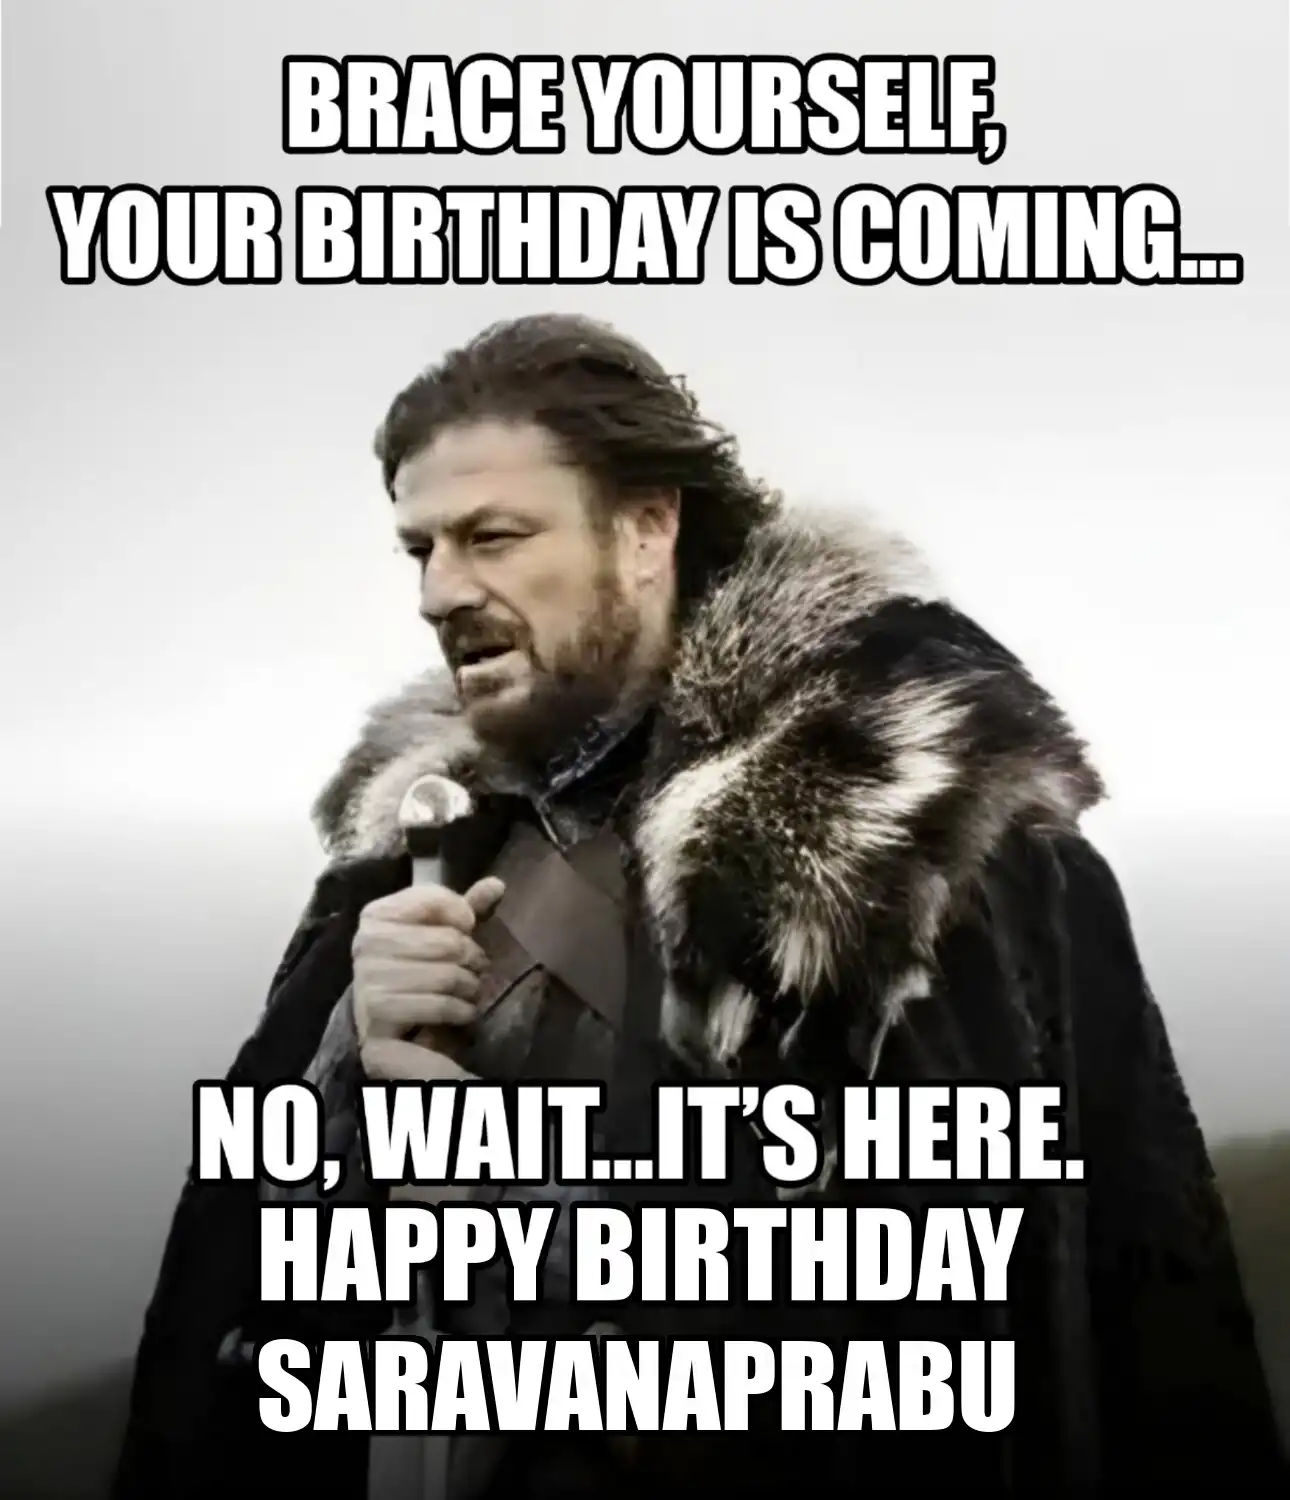 Happy Birthday Saravanaprabu Brace Yourself Your Birthday Is Coming Meme